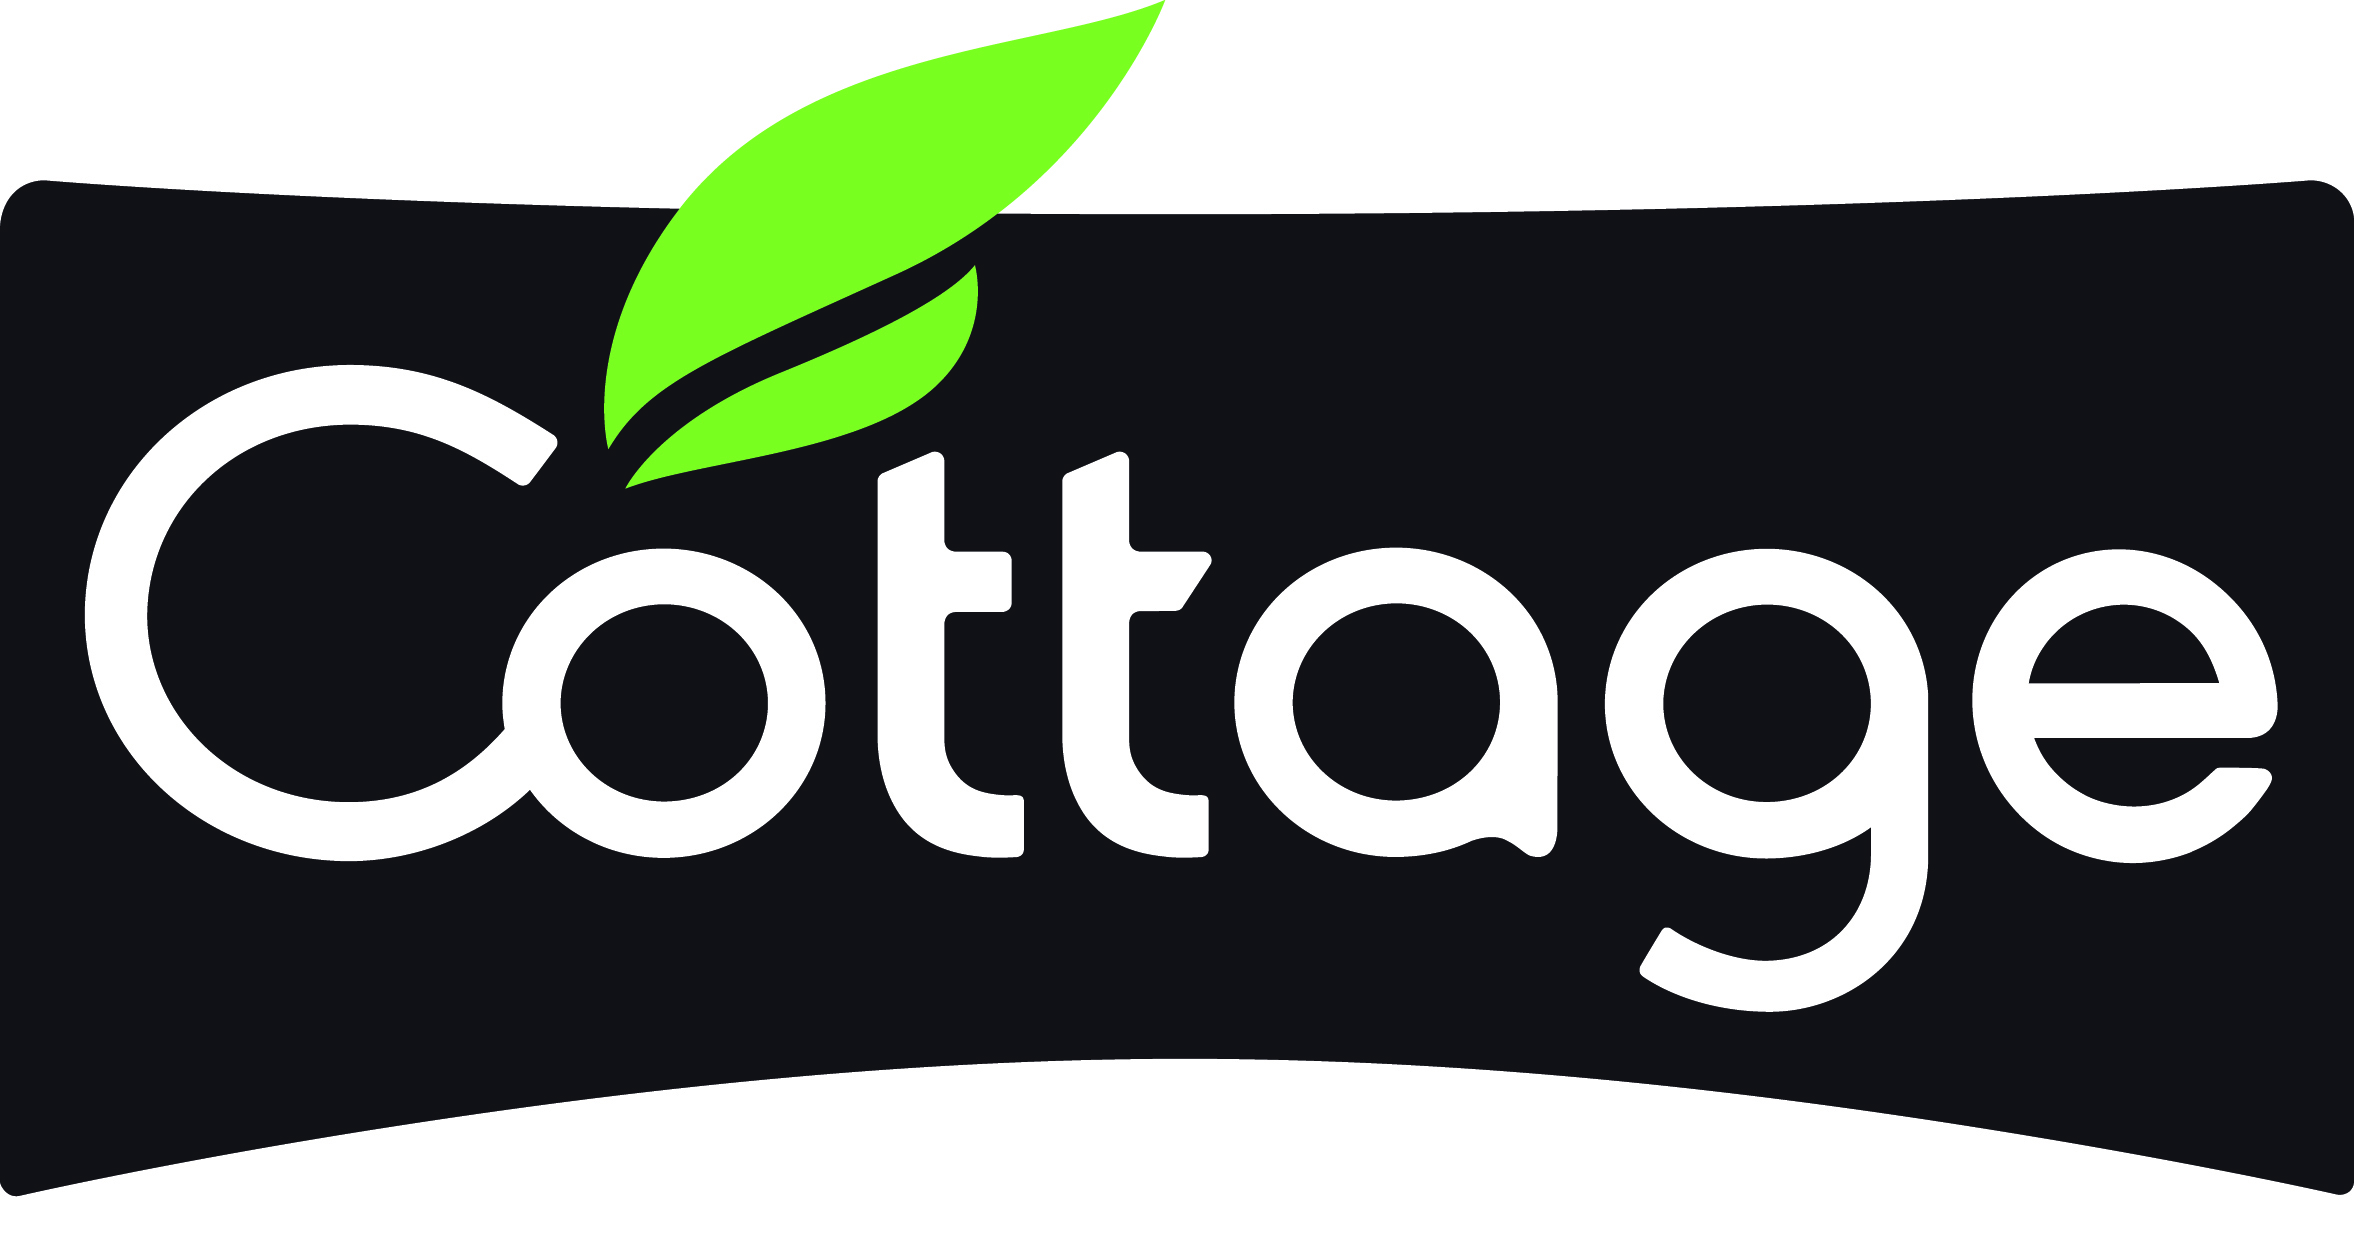 logo COTTAGE